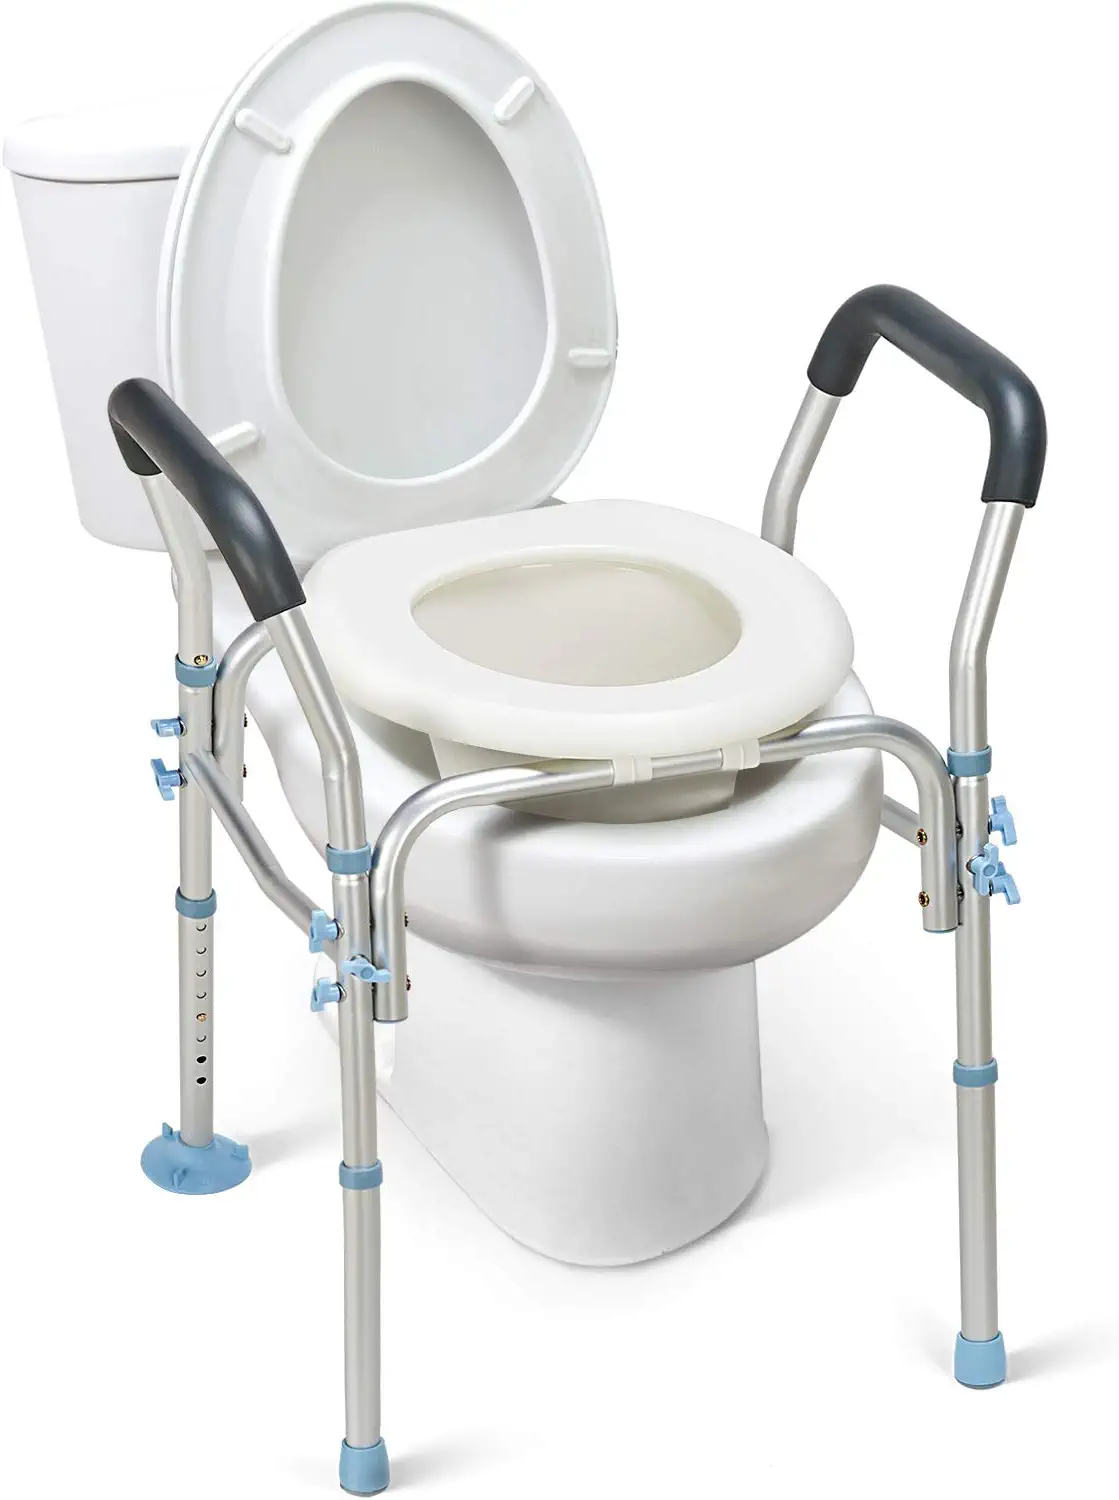 toilet seat raiser with legs